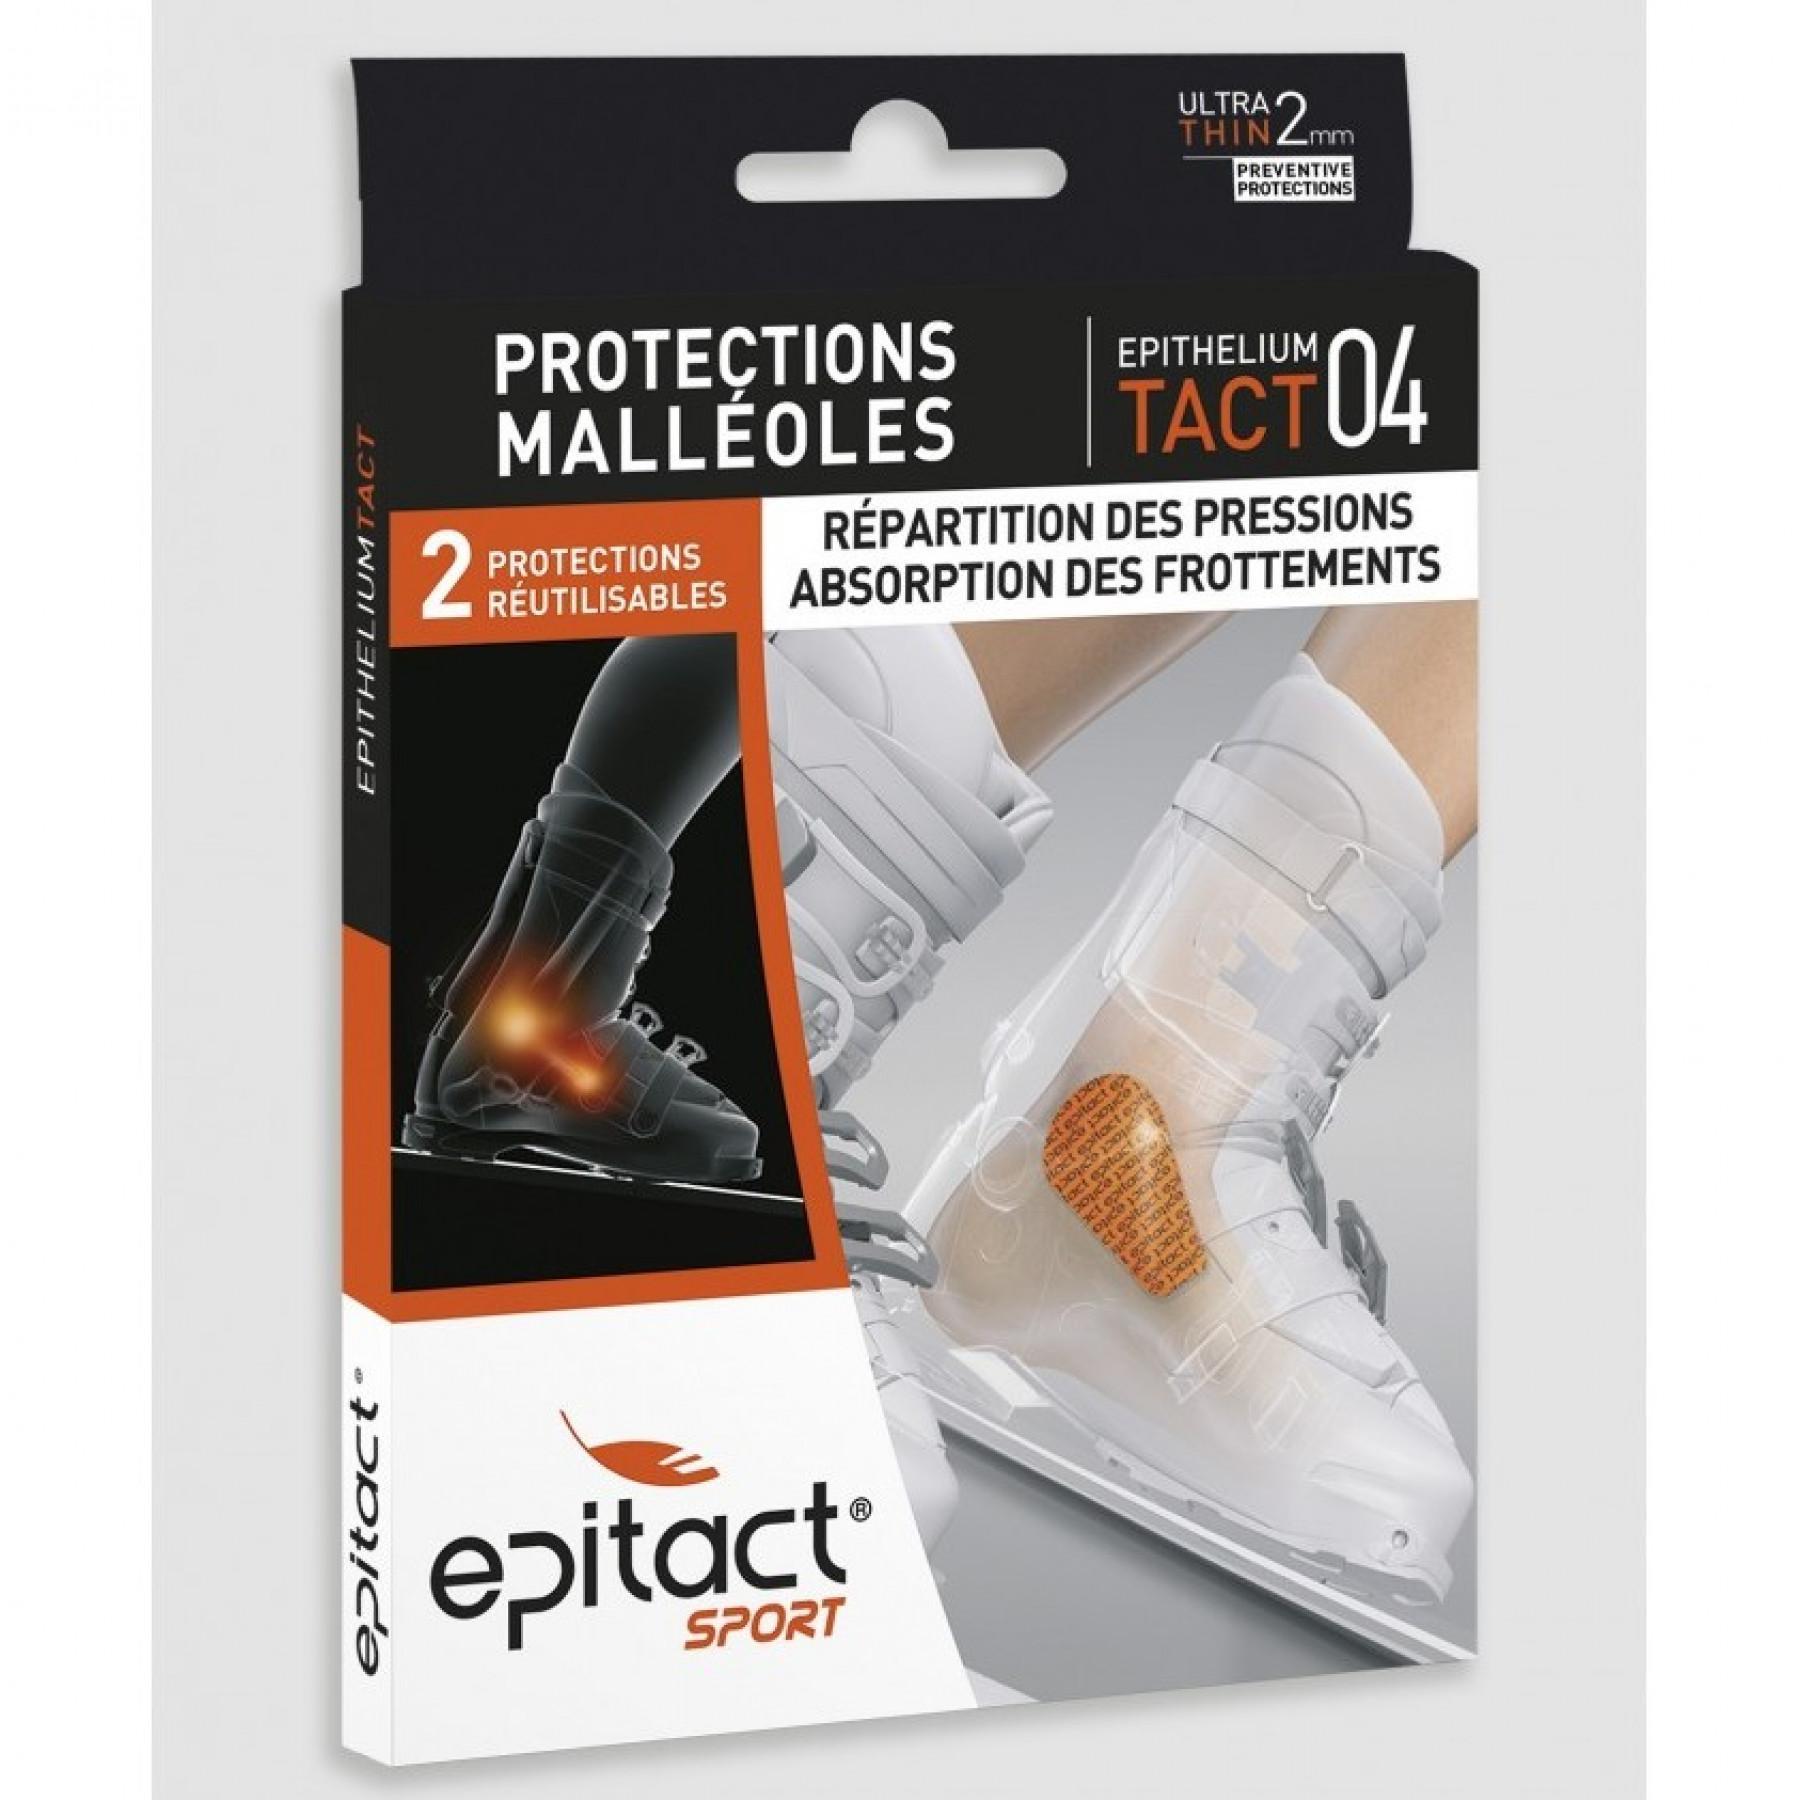 Skydd för malleolus Epitact EPITHELIUMTACT 04 (lot de 2 protections)